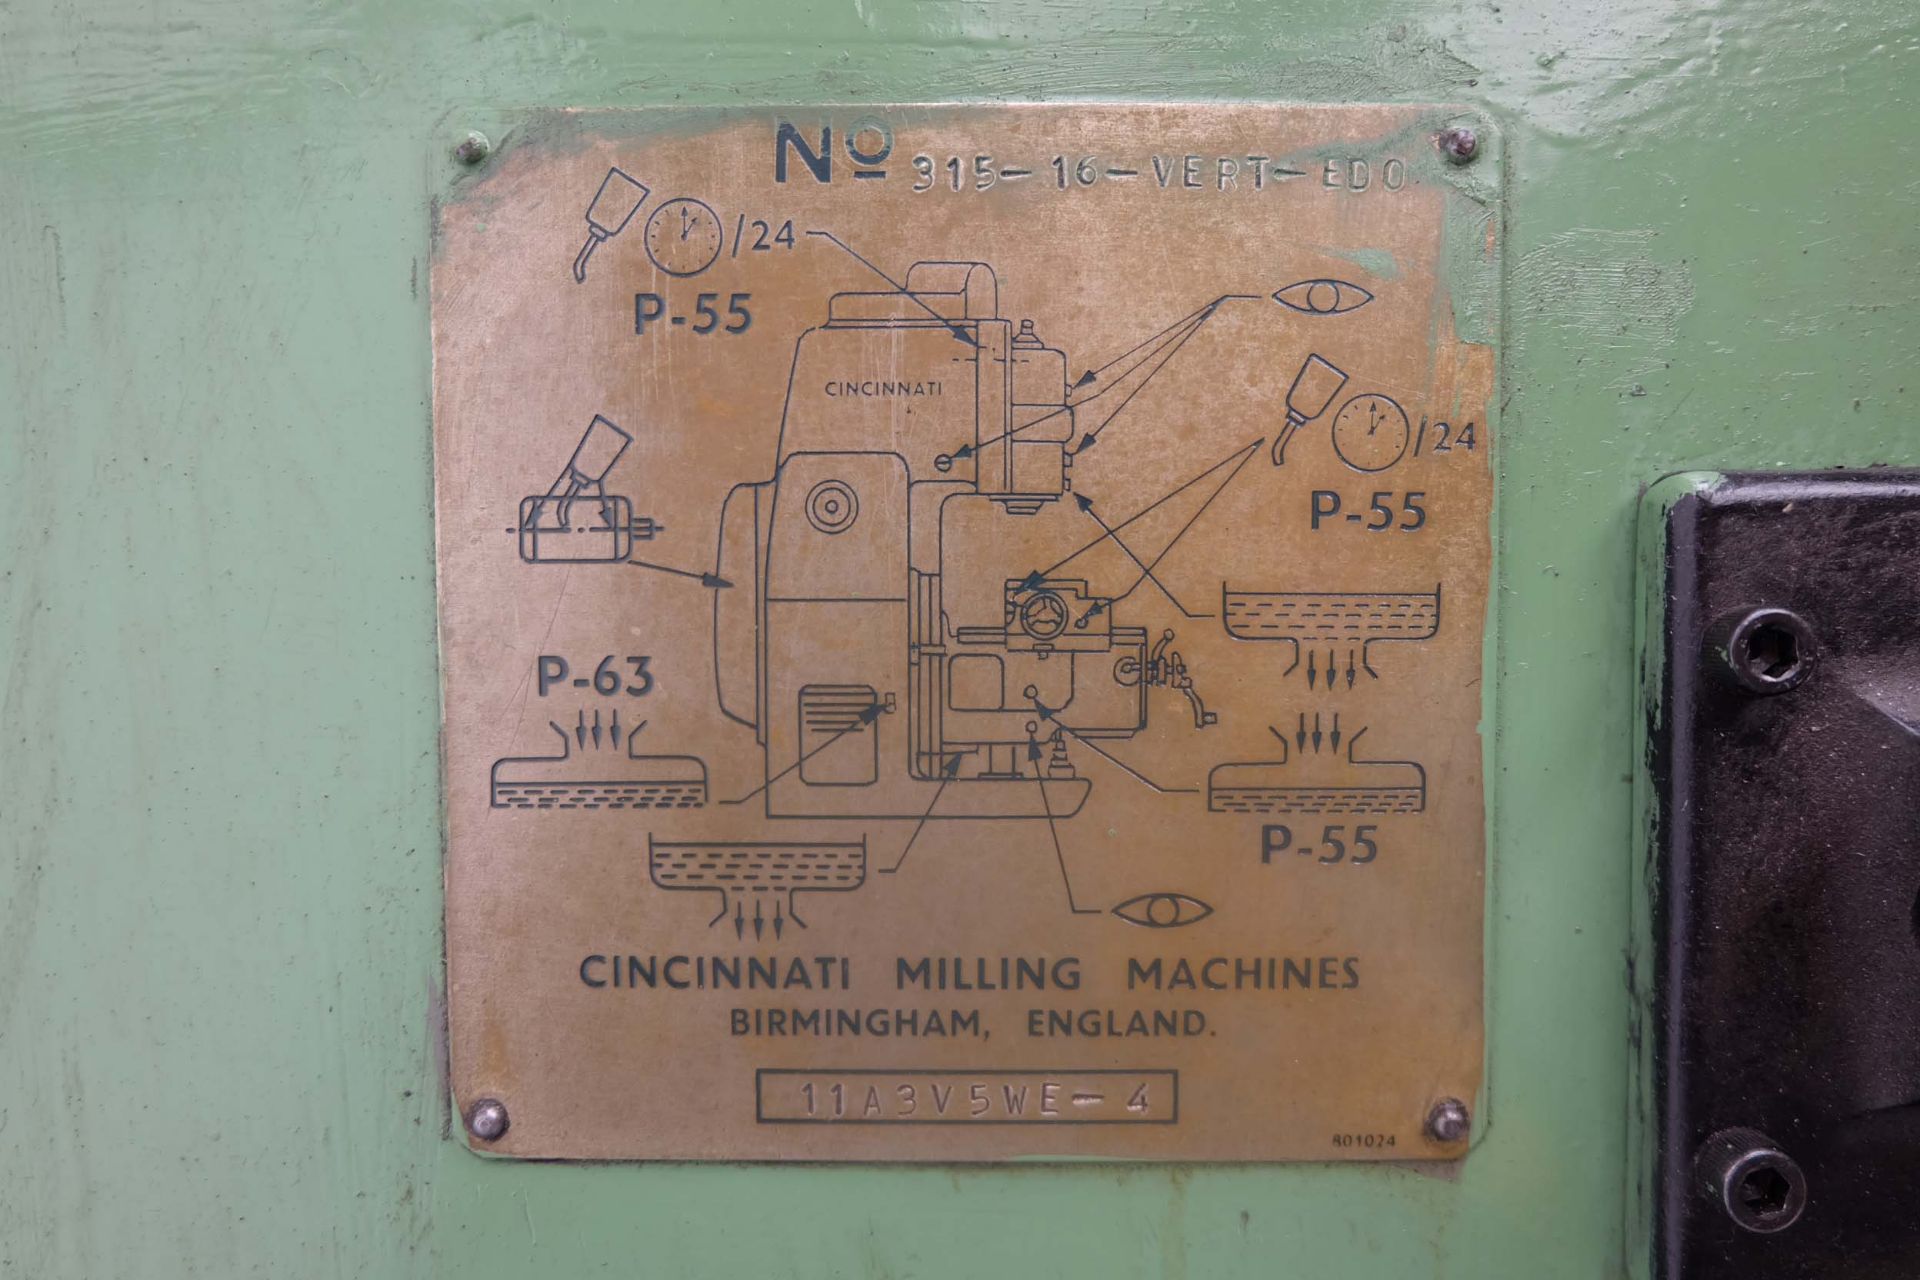 Cincinnati 315-16-EDO Vertical Milling Machine. Table Size: 68 1/2" x 16 1/4". Spindle Taper 50 Inte - Image 10 of 12